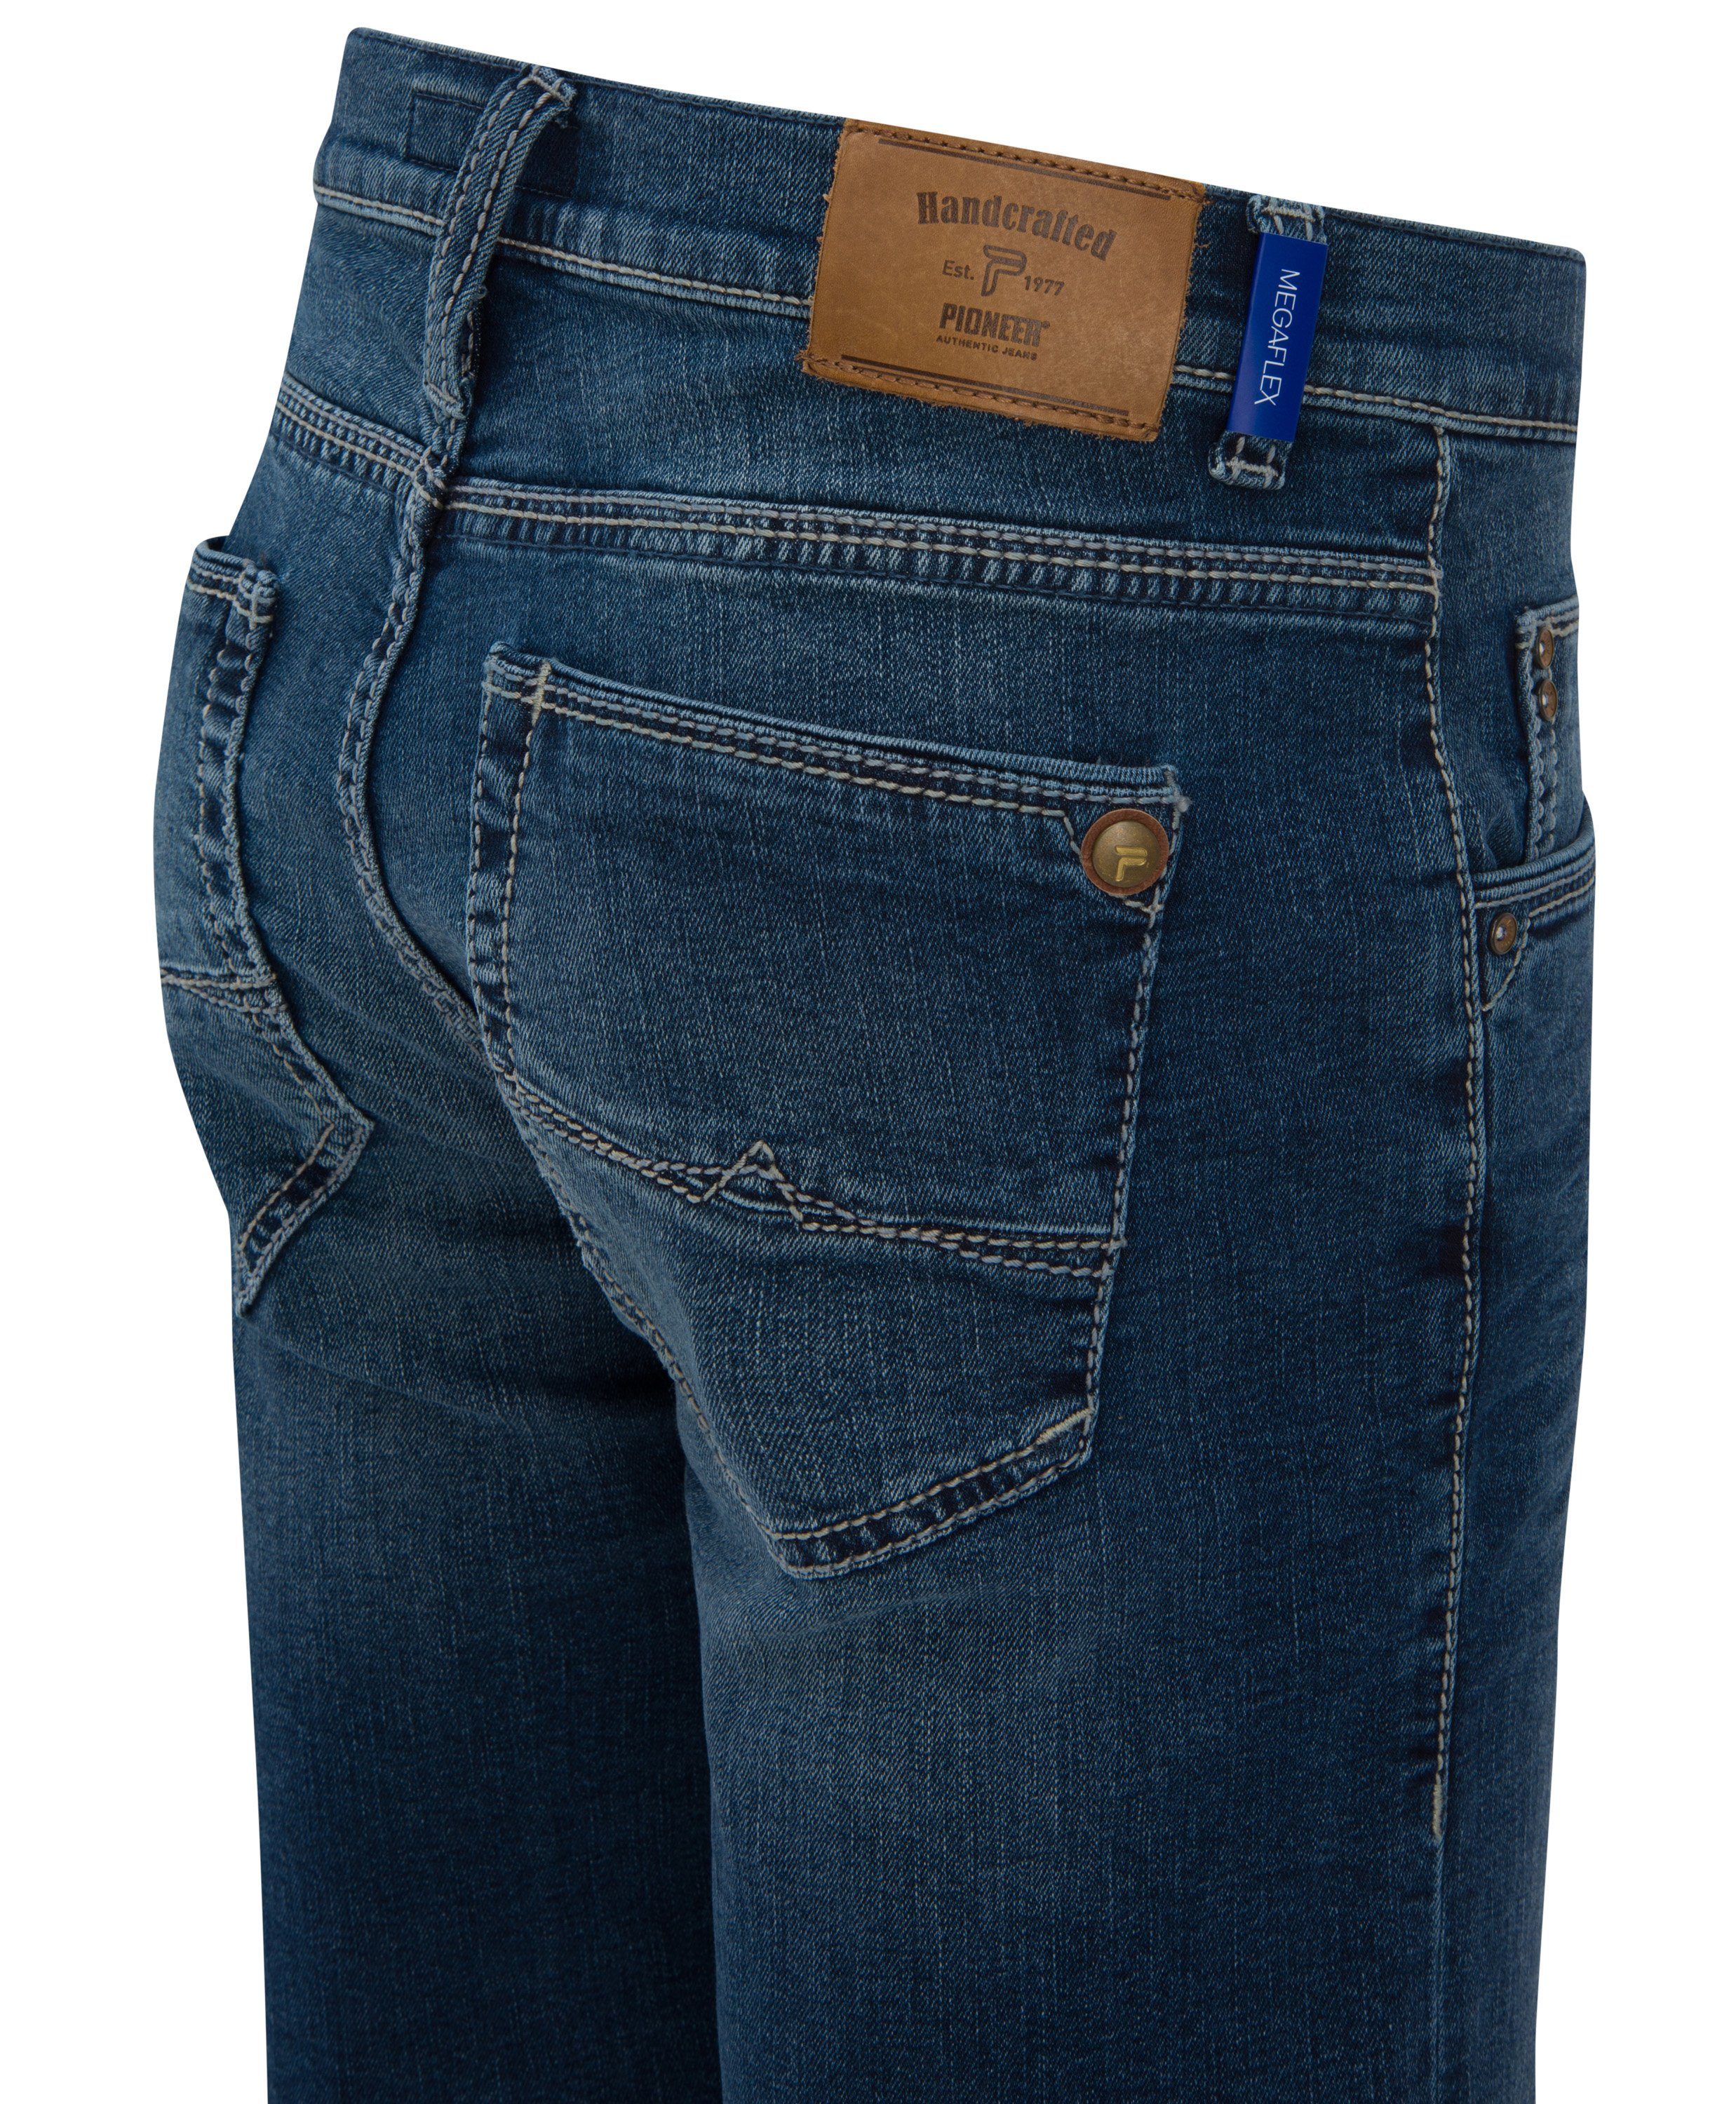 Jeans HANDCRAFTE MEGAFLEX stone Authentic blue PIONEER SHORT Pioneer - 5-Pocket-Jeans 1317 used DUKE 9923.327